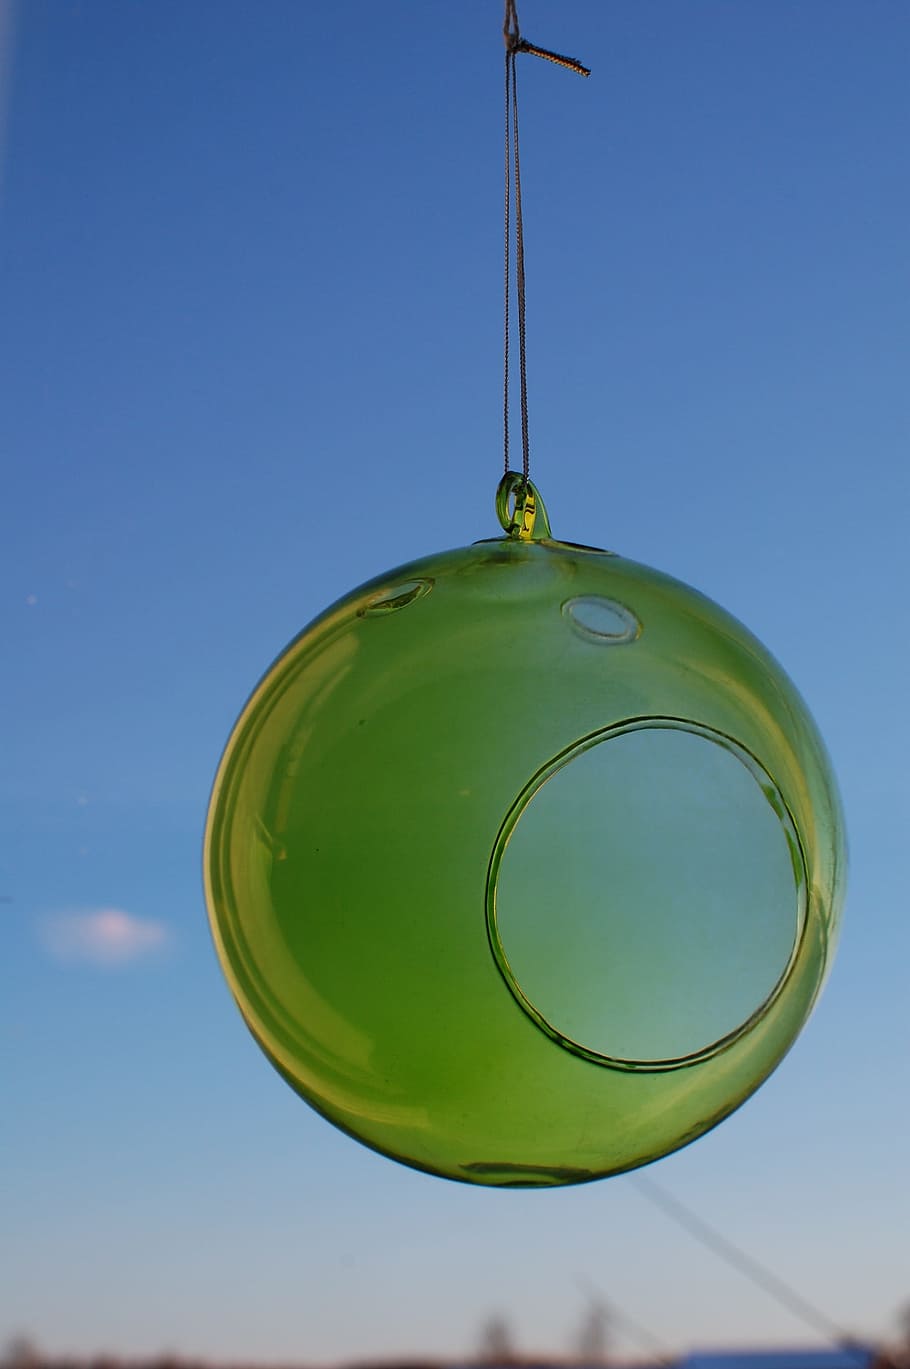 Sphere, Ornament, Glass, Ball, Hollow, green, design, glasswork, hanging, decoration